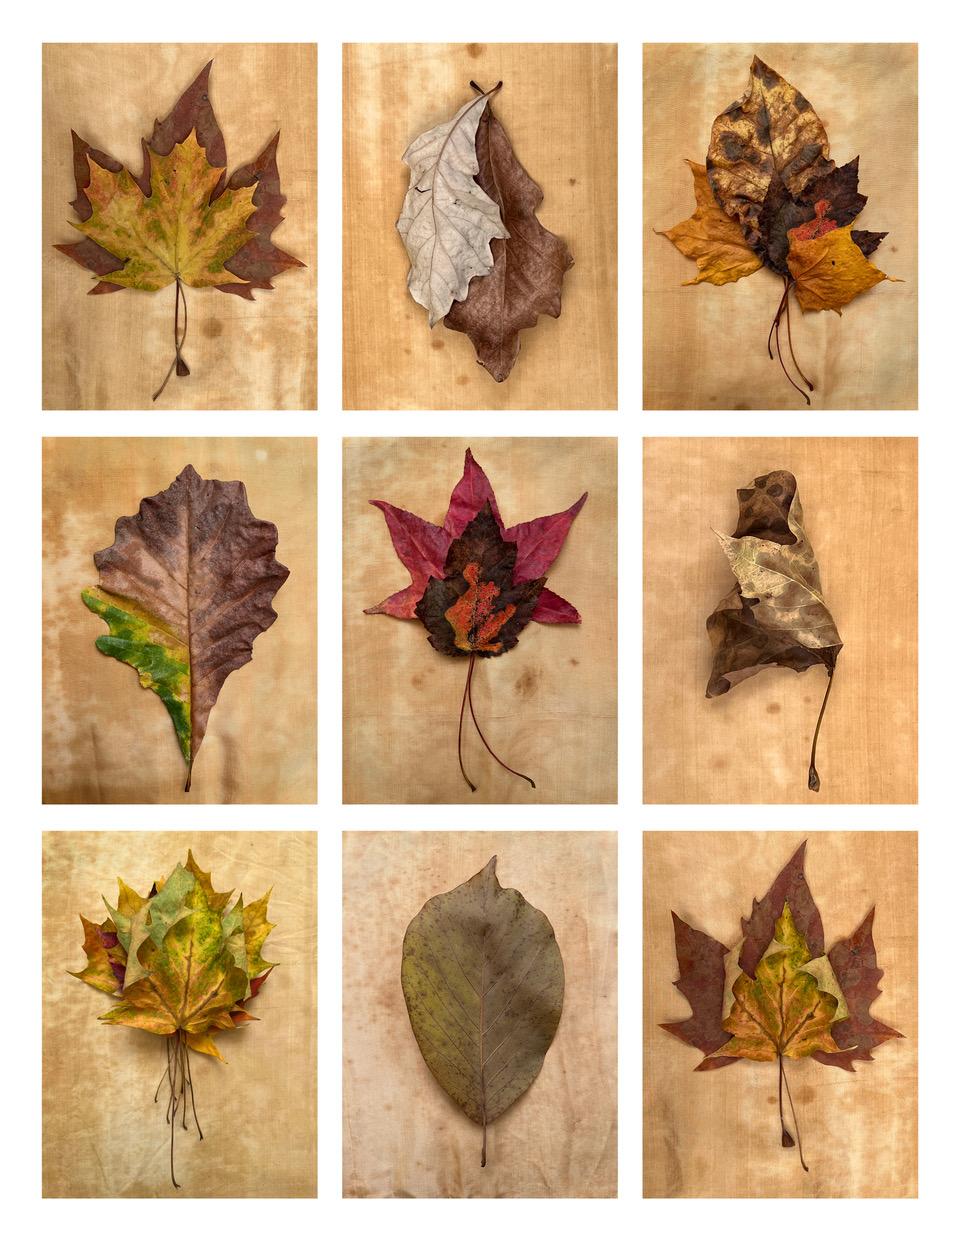 Paul Cava Still-Life Photograph - Nine Leaves: grid w/ nature still life leaf photographs in gold, red, green